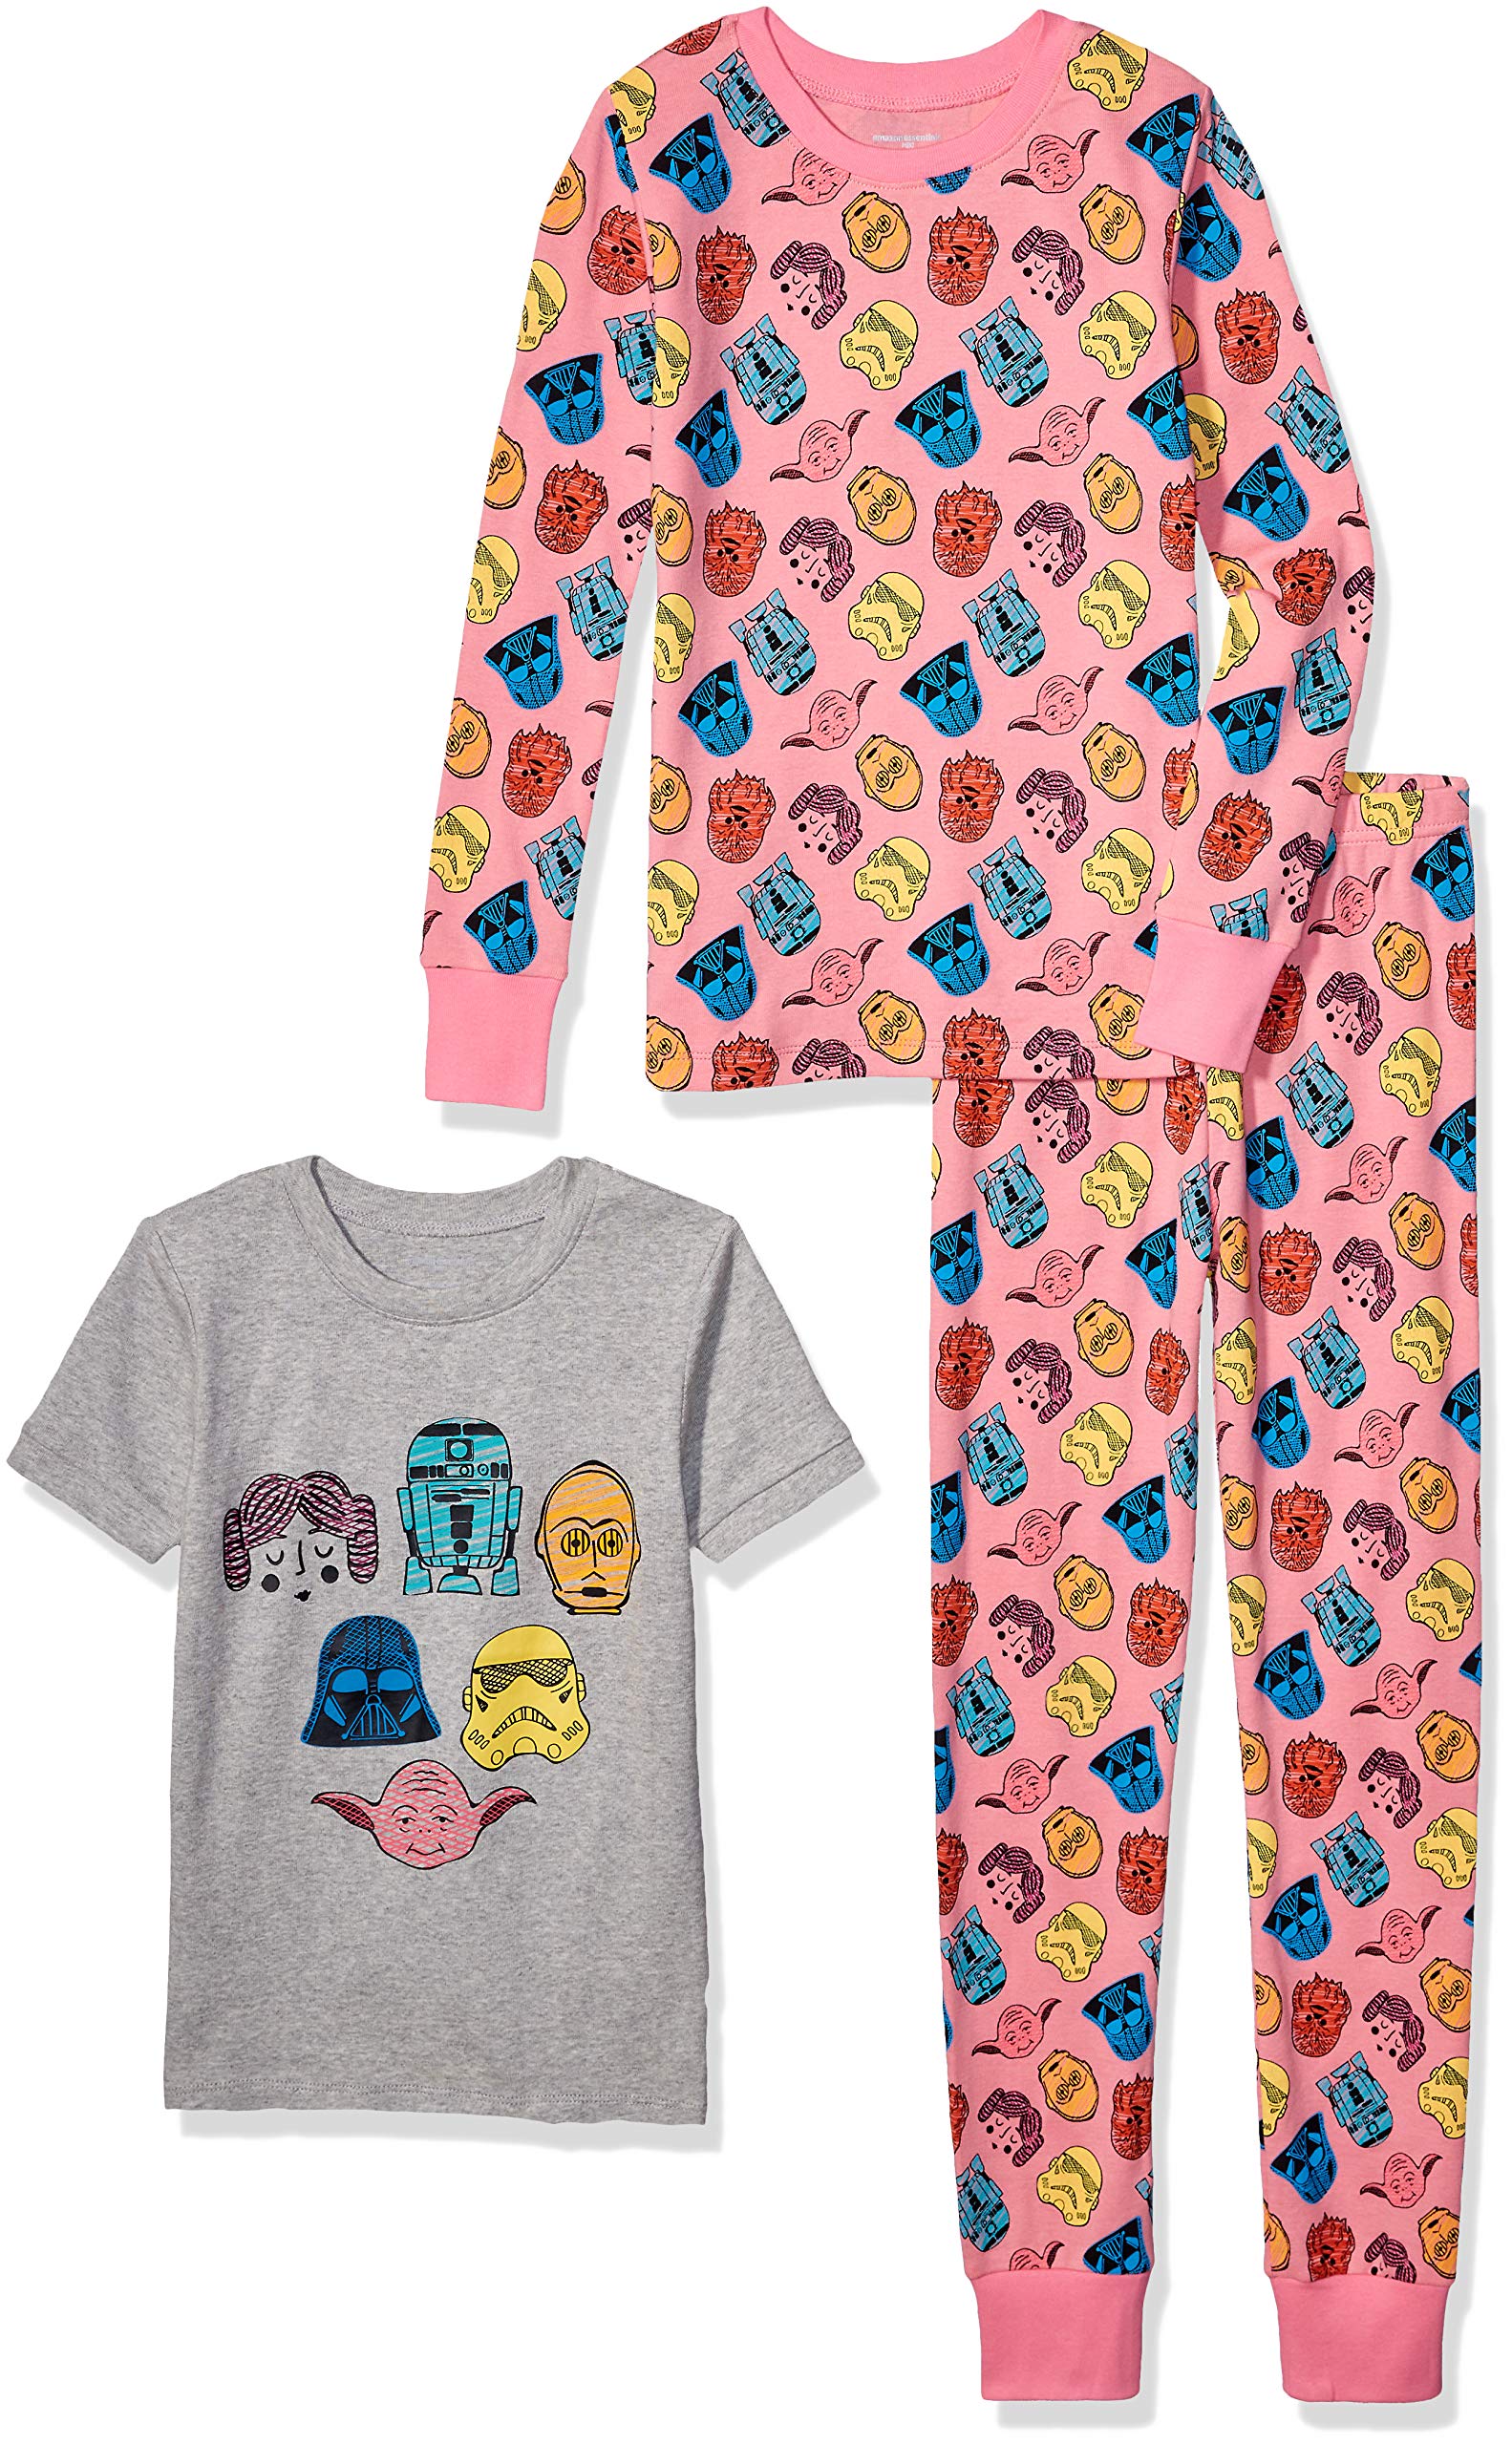 Amazon Essentials  Essentials Disney  Marvel Frozen  Princess Baby Girls Snug-Fit Cotton Pajama Sleepwear Sets (Previously Spotted Zebra), P